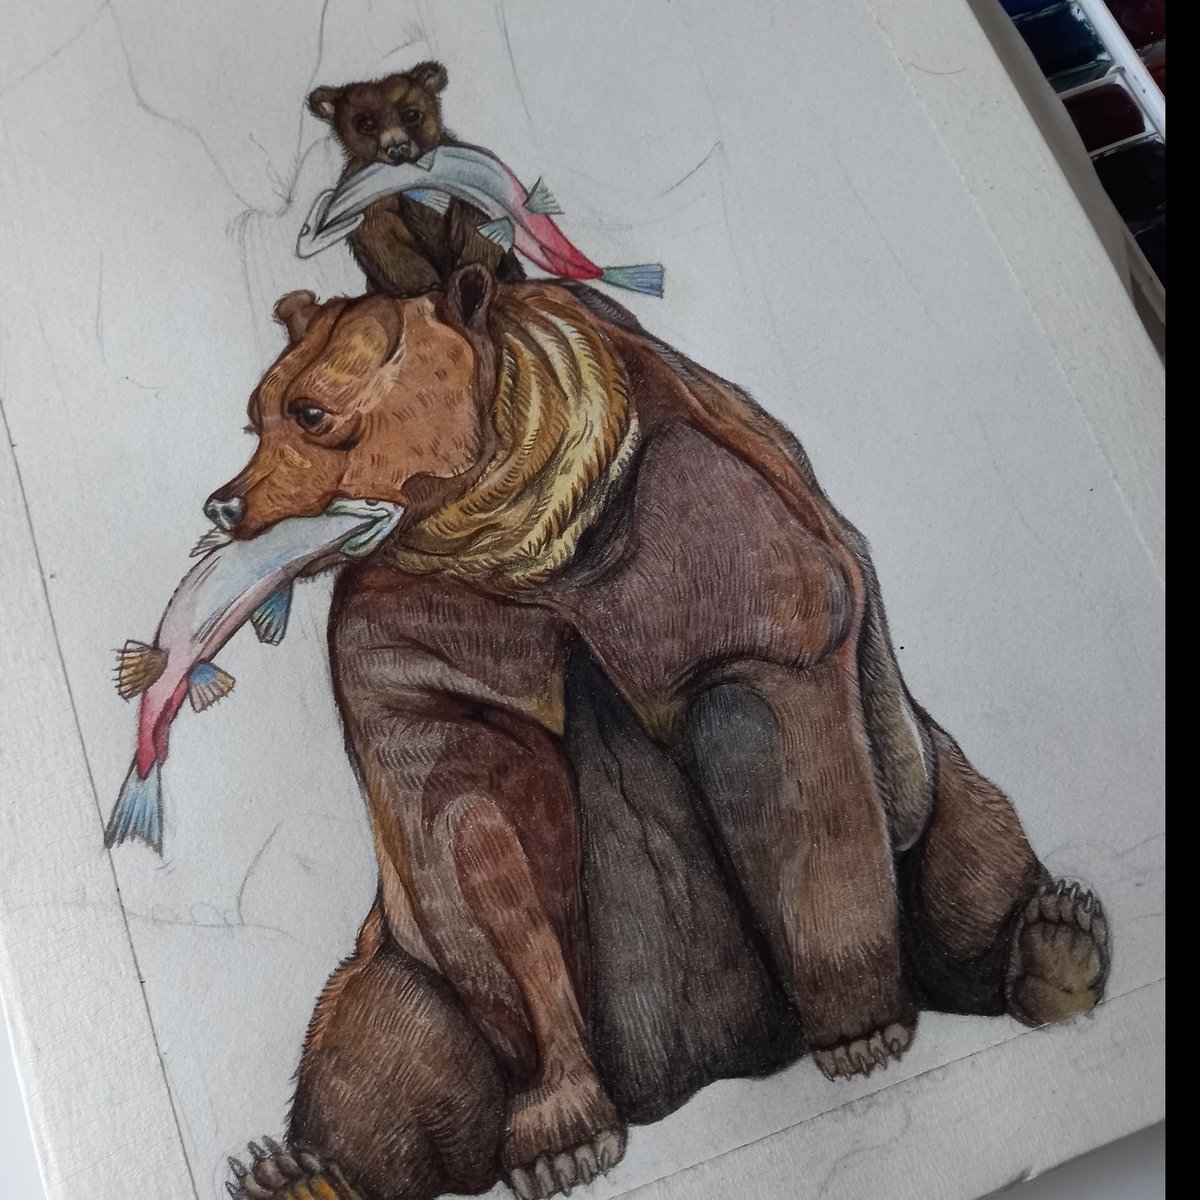 🐻🐟
.
.
.
.
#sketchbook #bear #sketch
#drawingpets #animalart
#animaldraw #animalartist
#animal #sketching #drawingsketch
#drawingnature #drawing